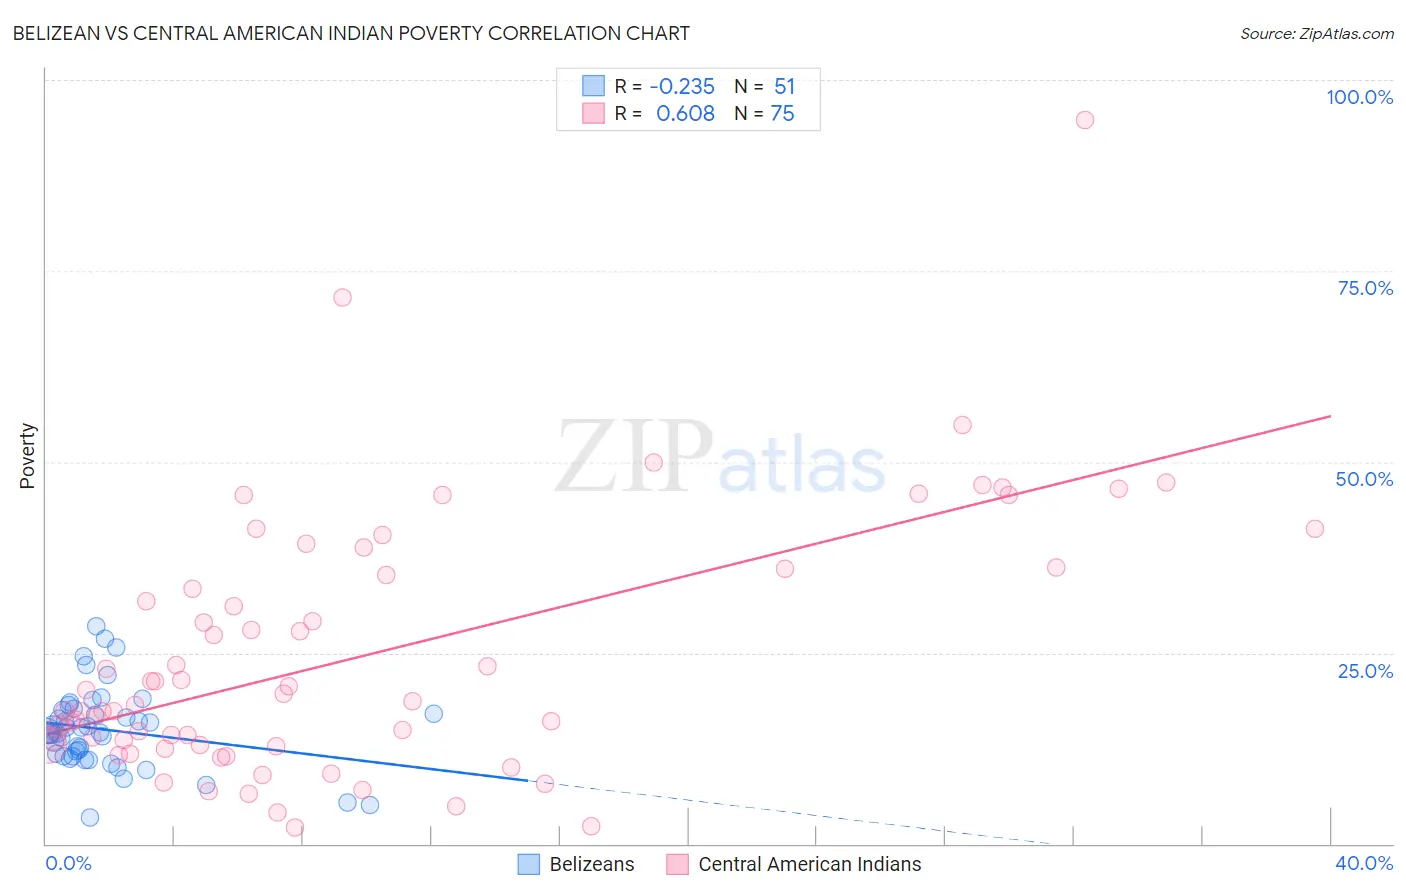 Belizean vs Central American Indian Poverty